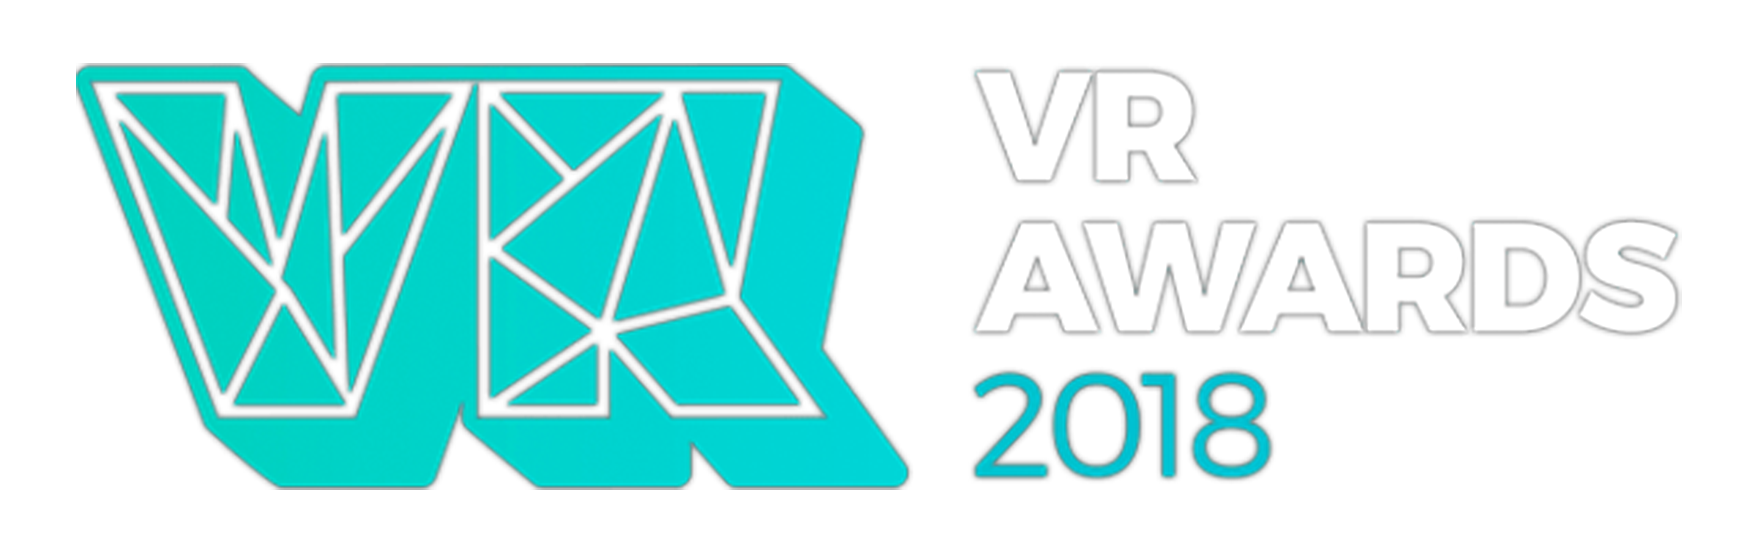 VR Awards